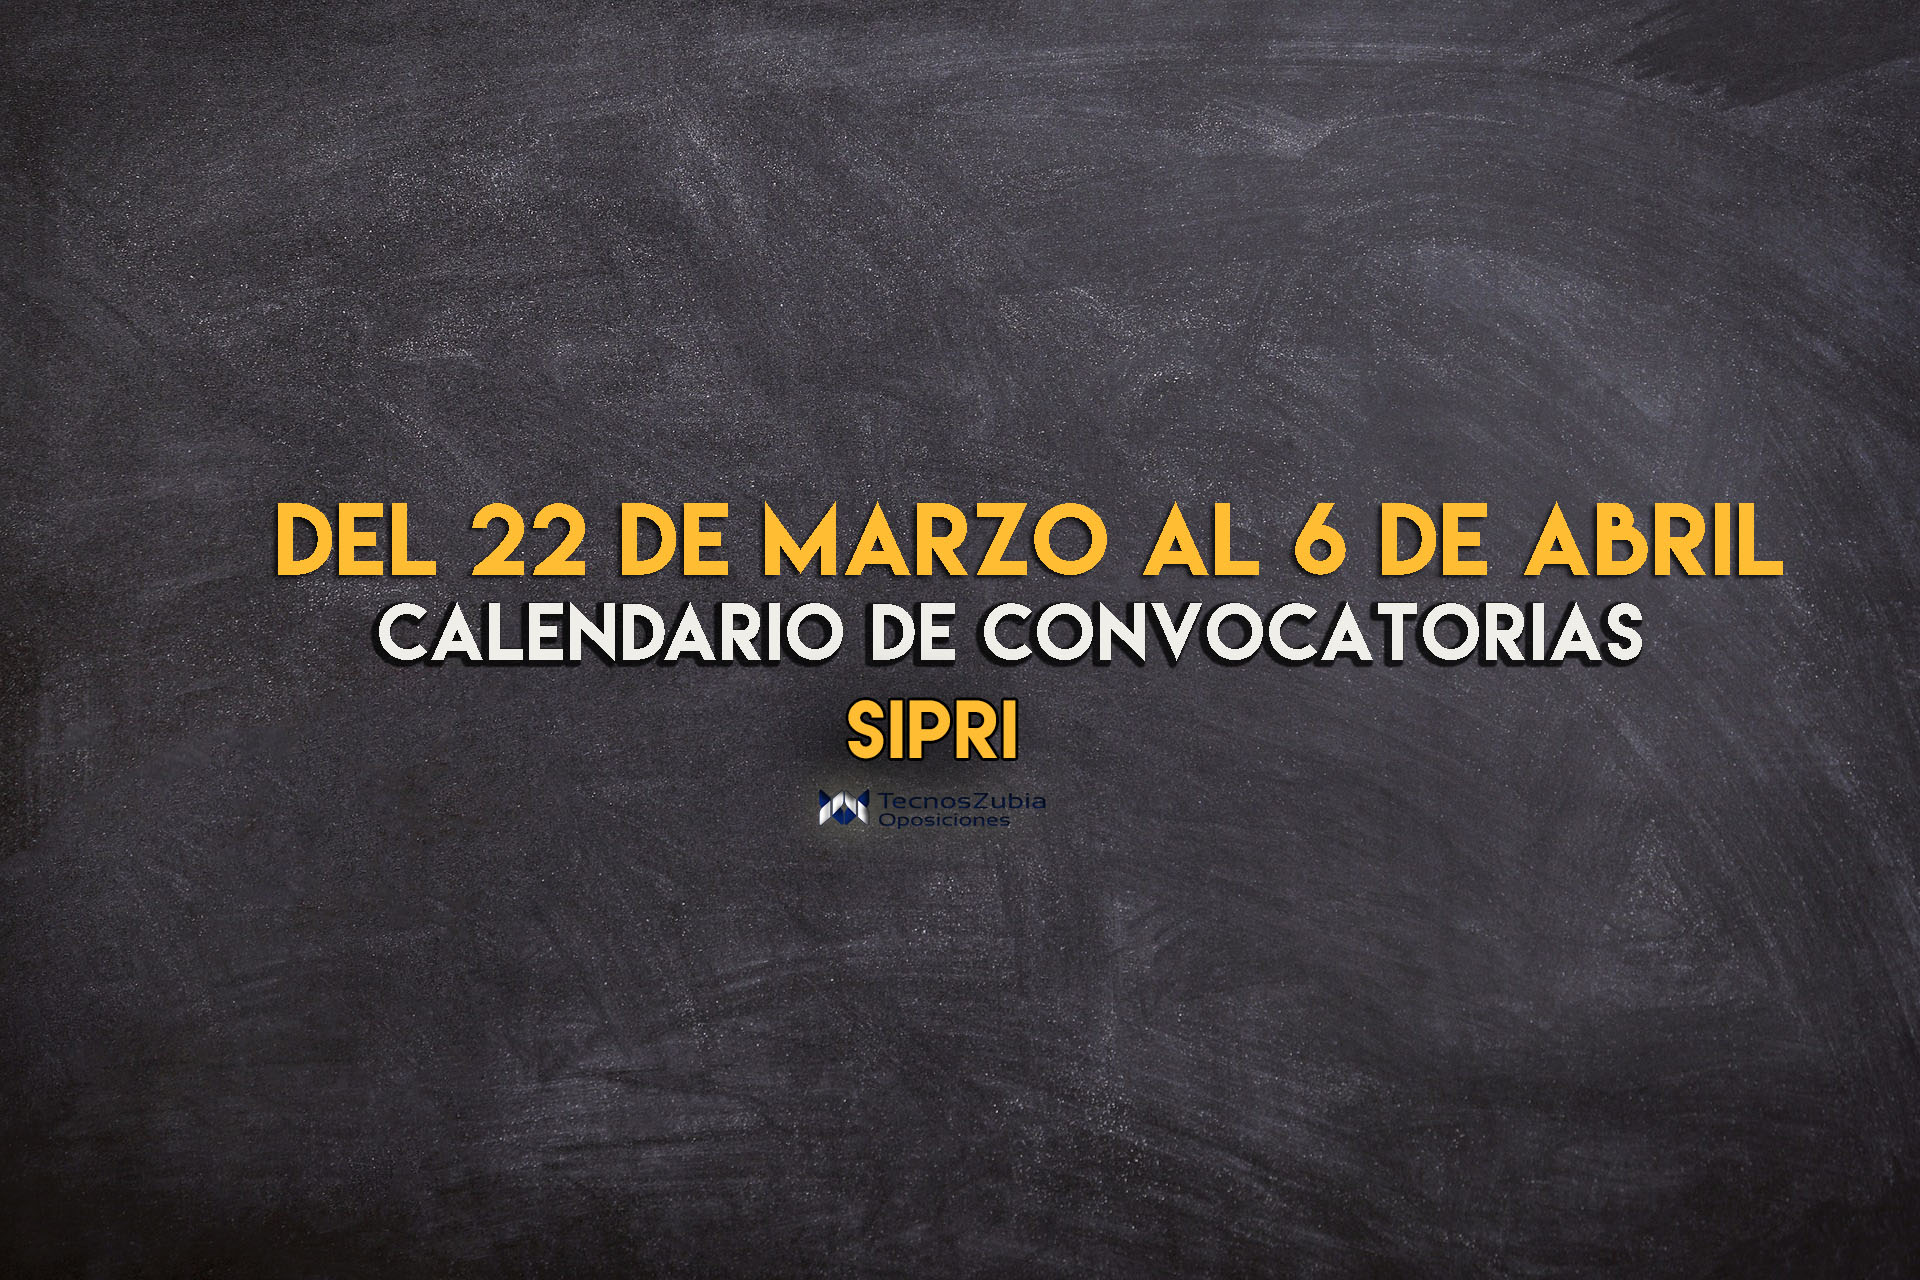 Calendario convocatorias SIPRI 22 marzo al 6 abril